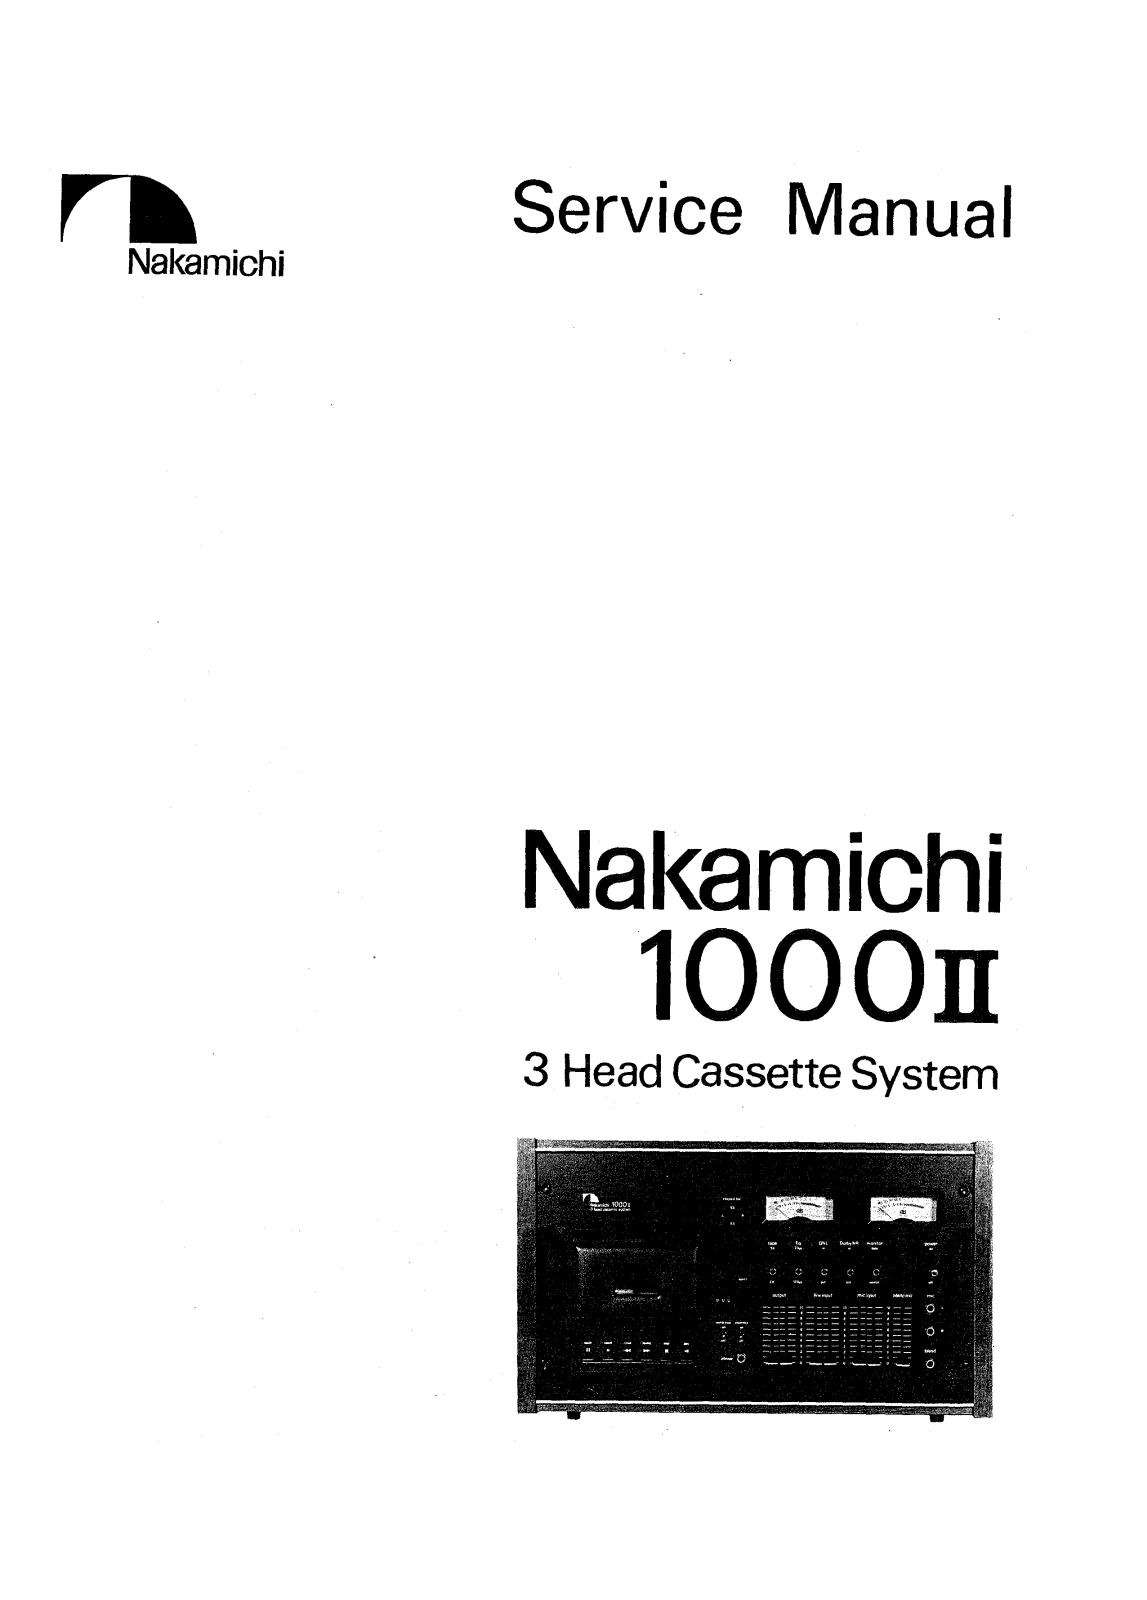 Nakamichi 1000-II Service Manual